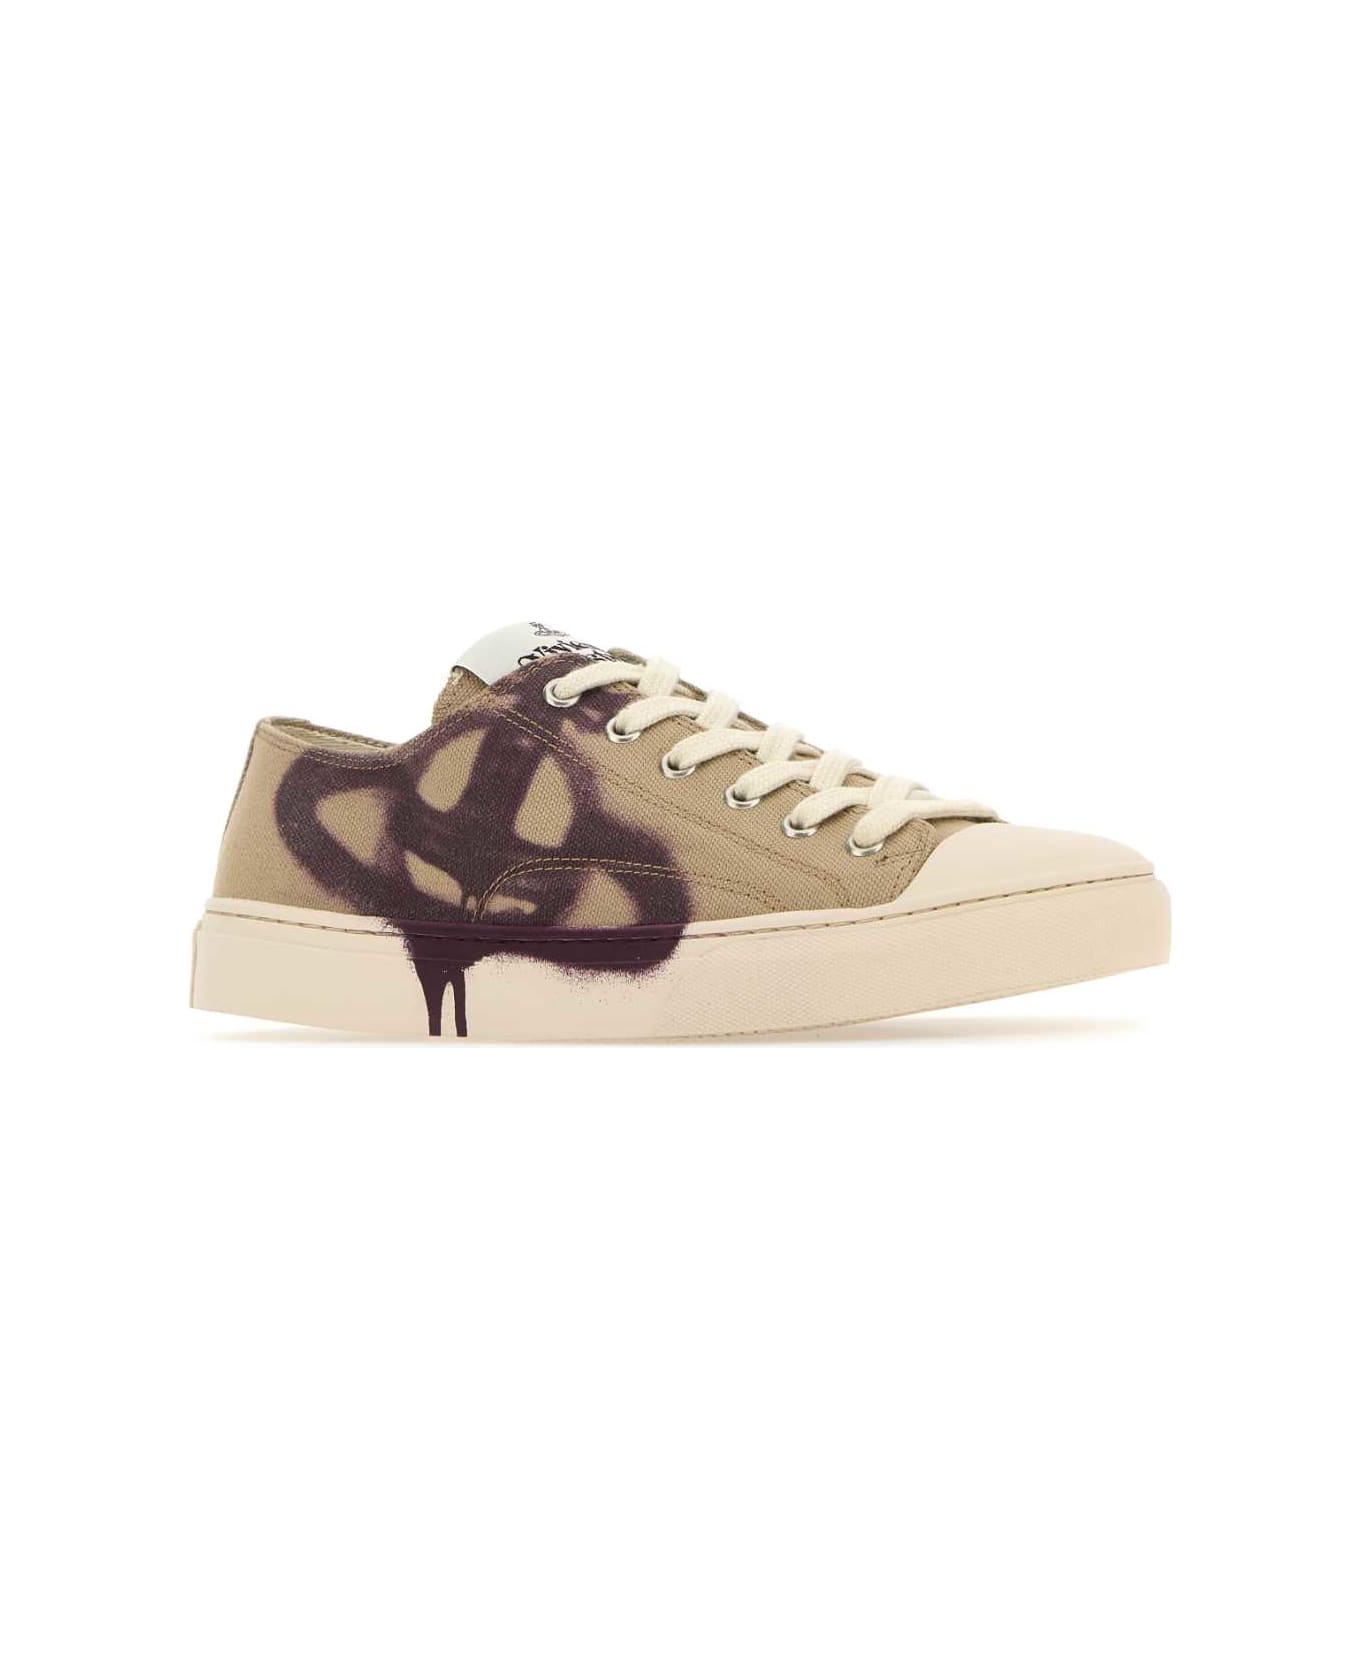 Vivienne Westwood Cappuccino Canvas Plimsoll Low Top 2.0 Sneakers - C301